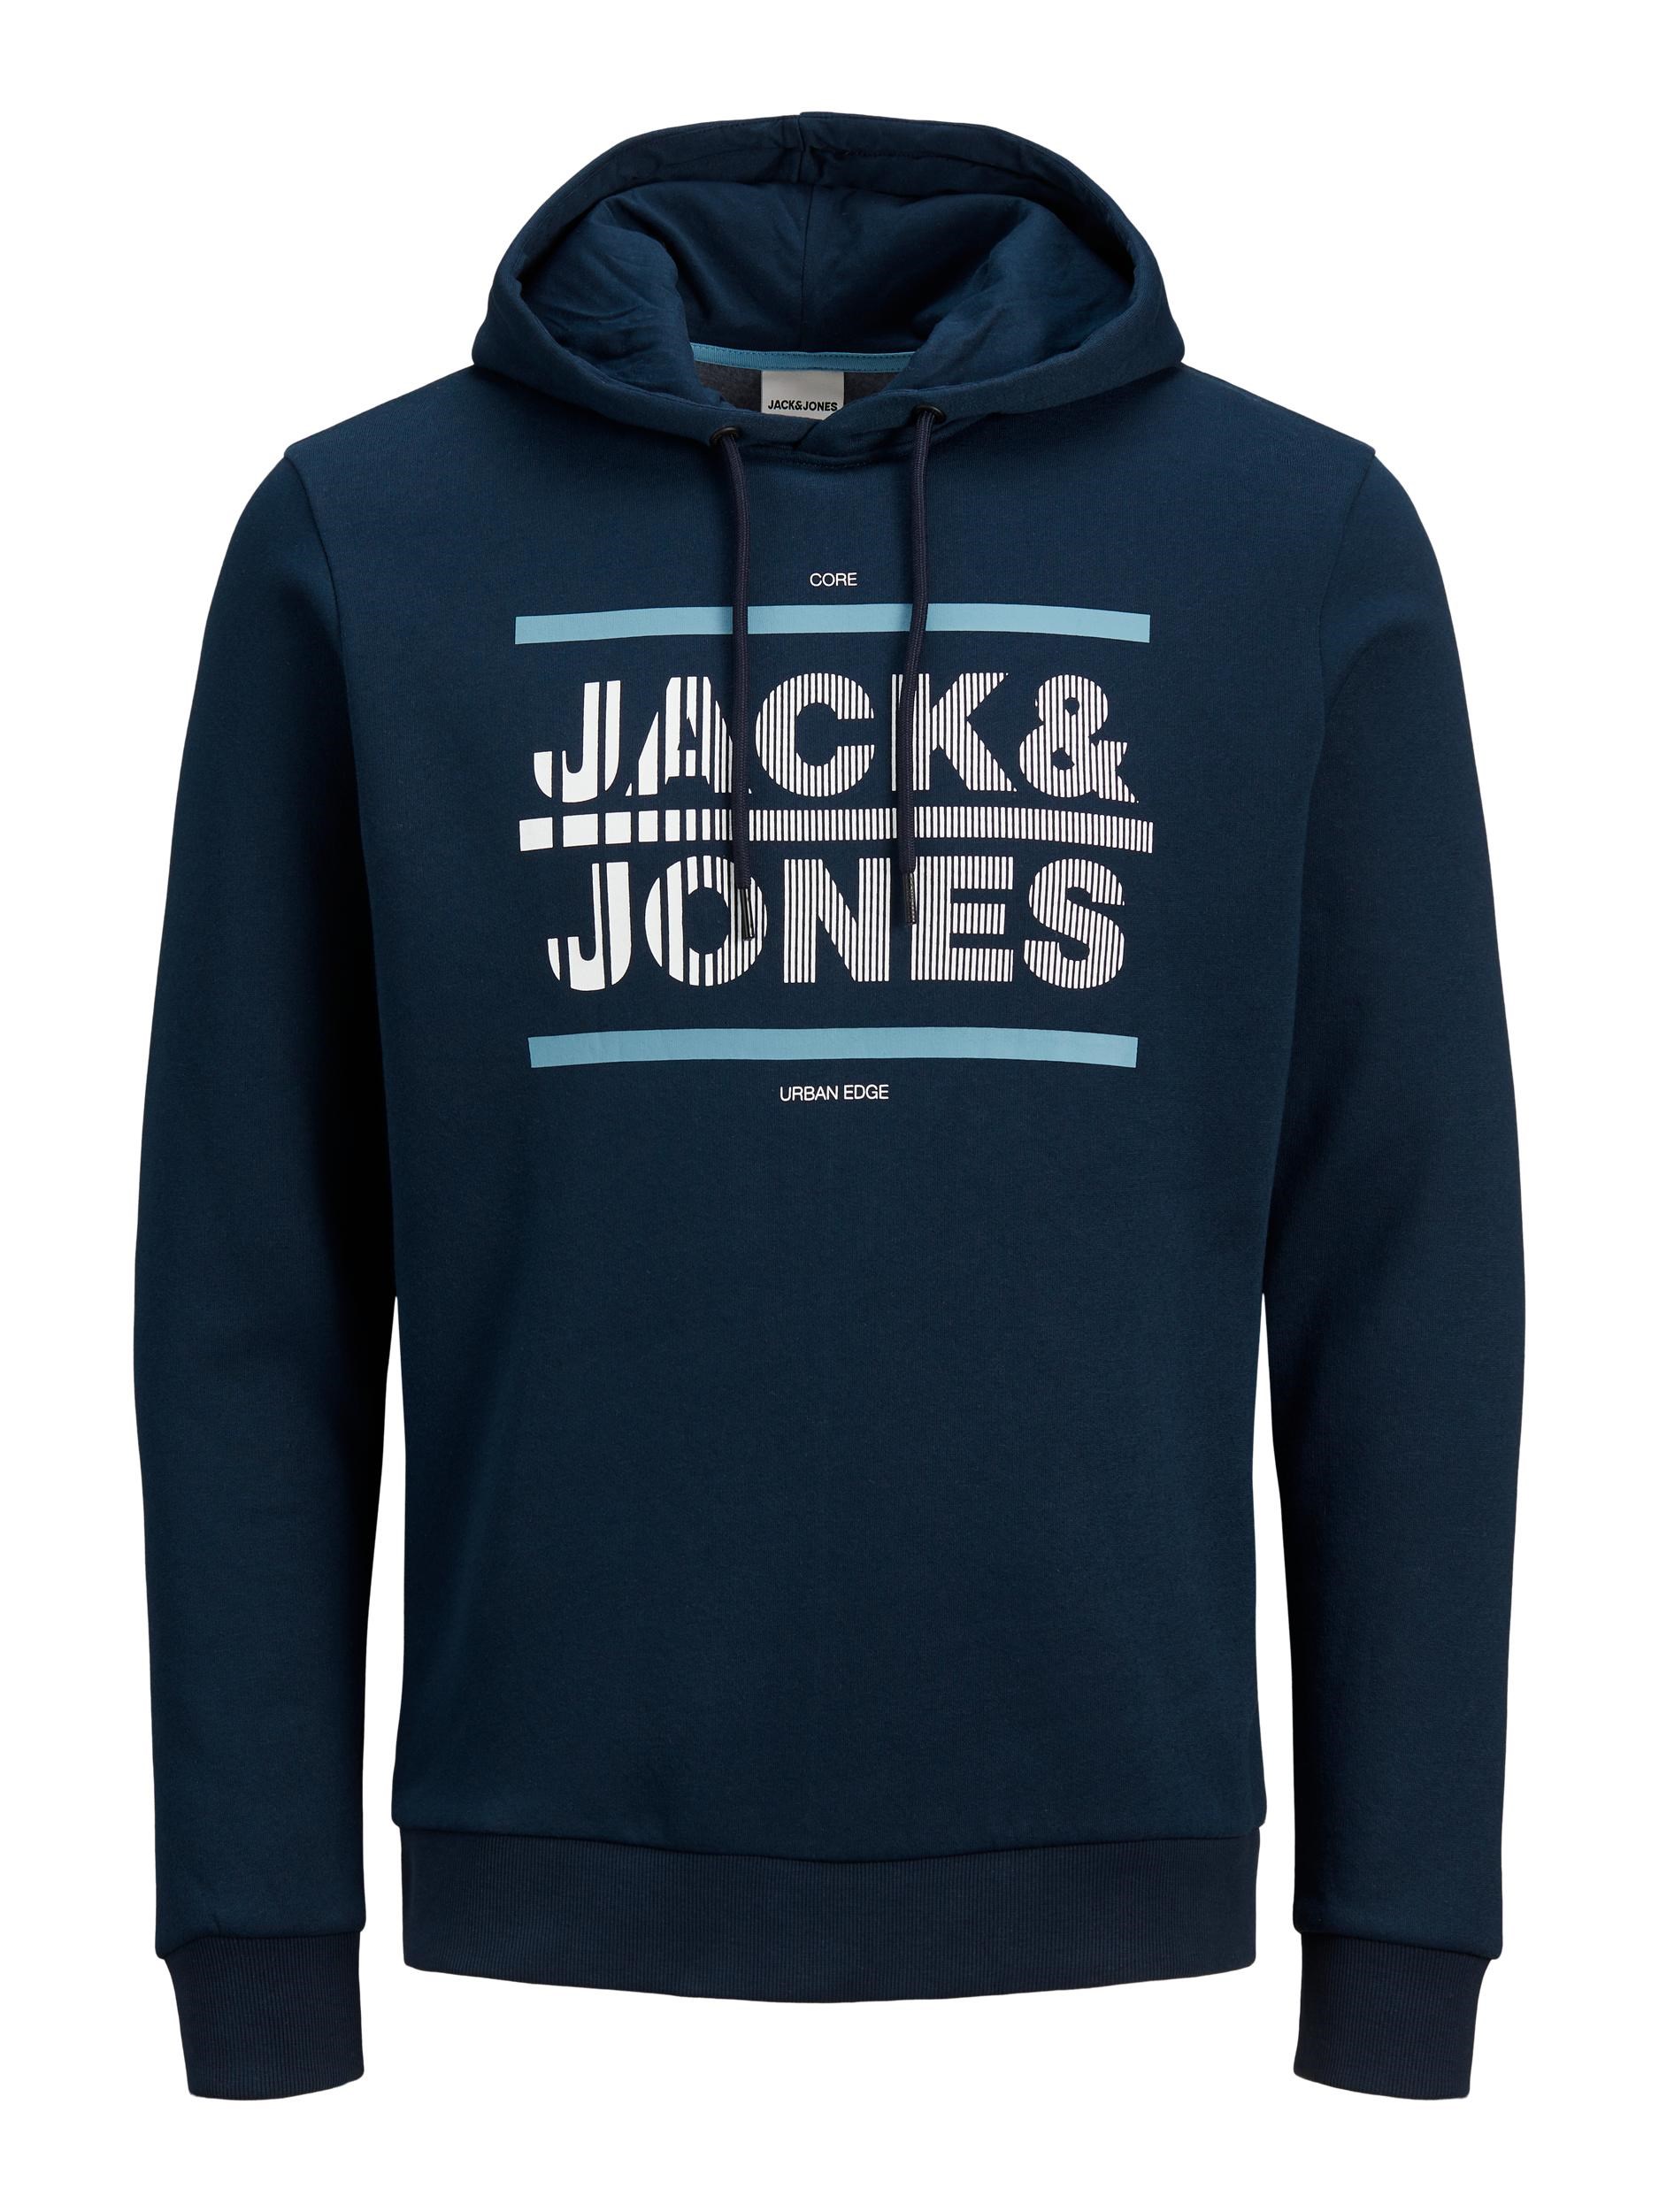 Jack Jones Erkek S-Shirt 12191028 Navy Blazer